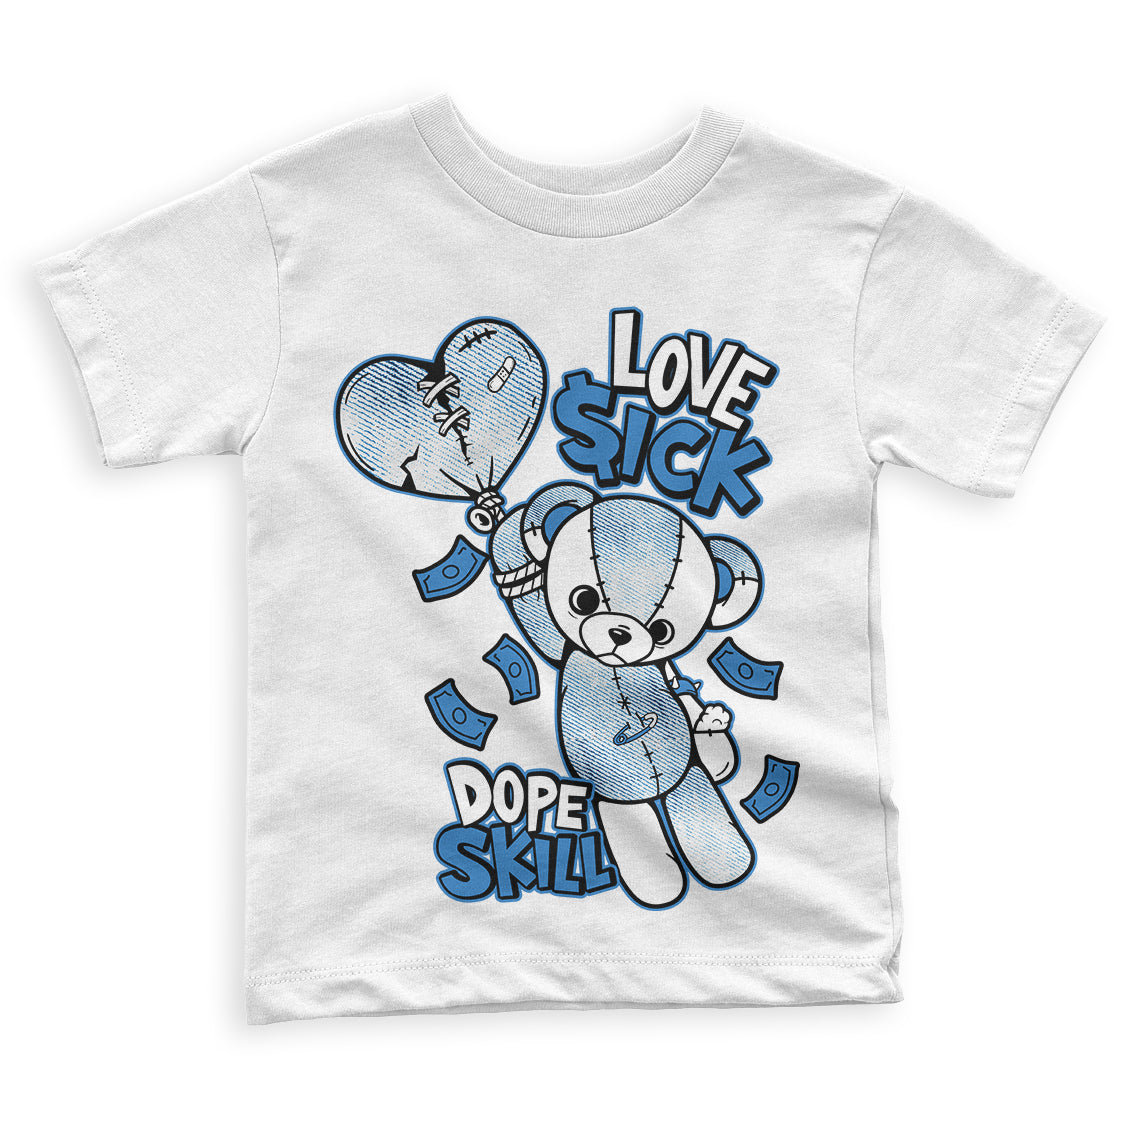 Acid Wash Denim 6s DopeSkill Toddler Kids T-shirt Love Sick Graphic